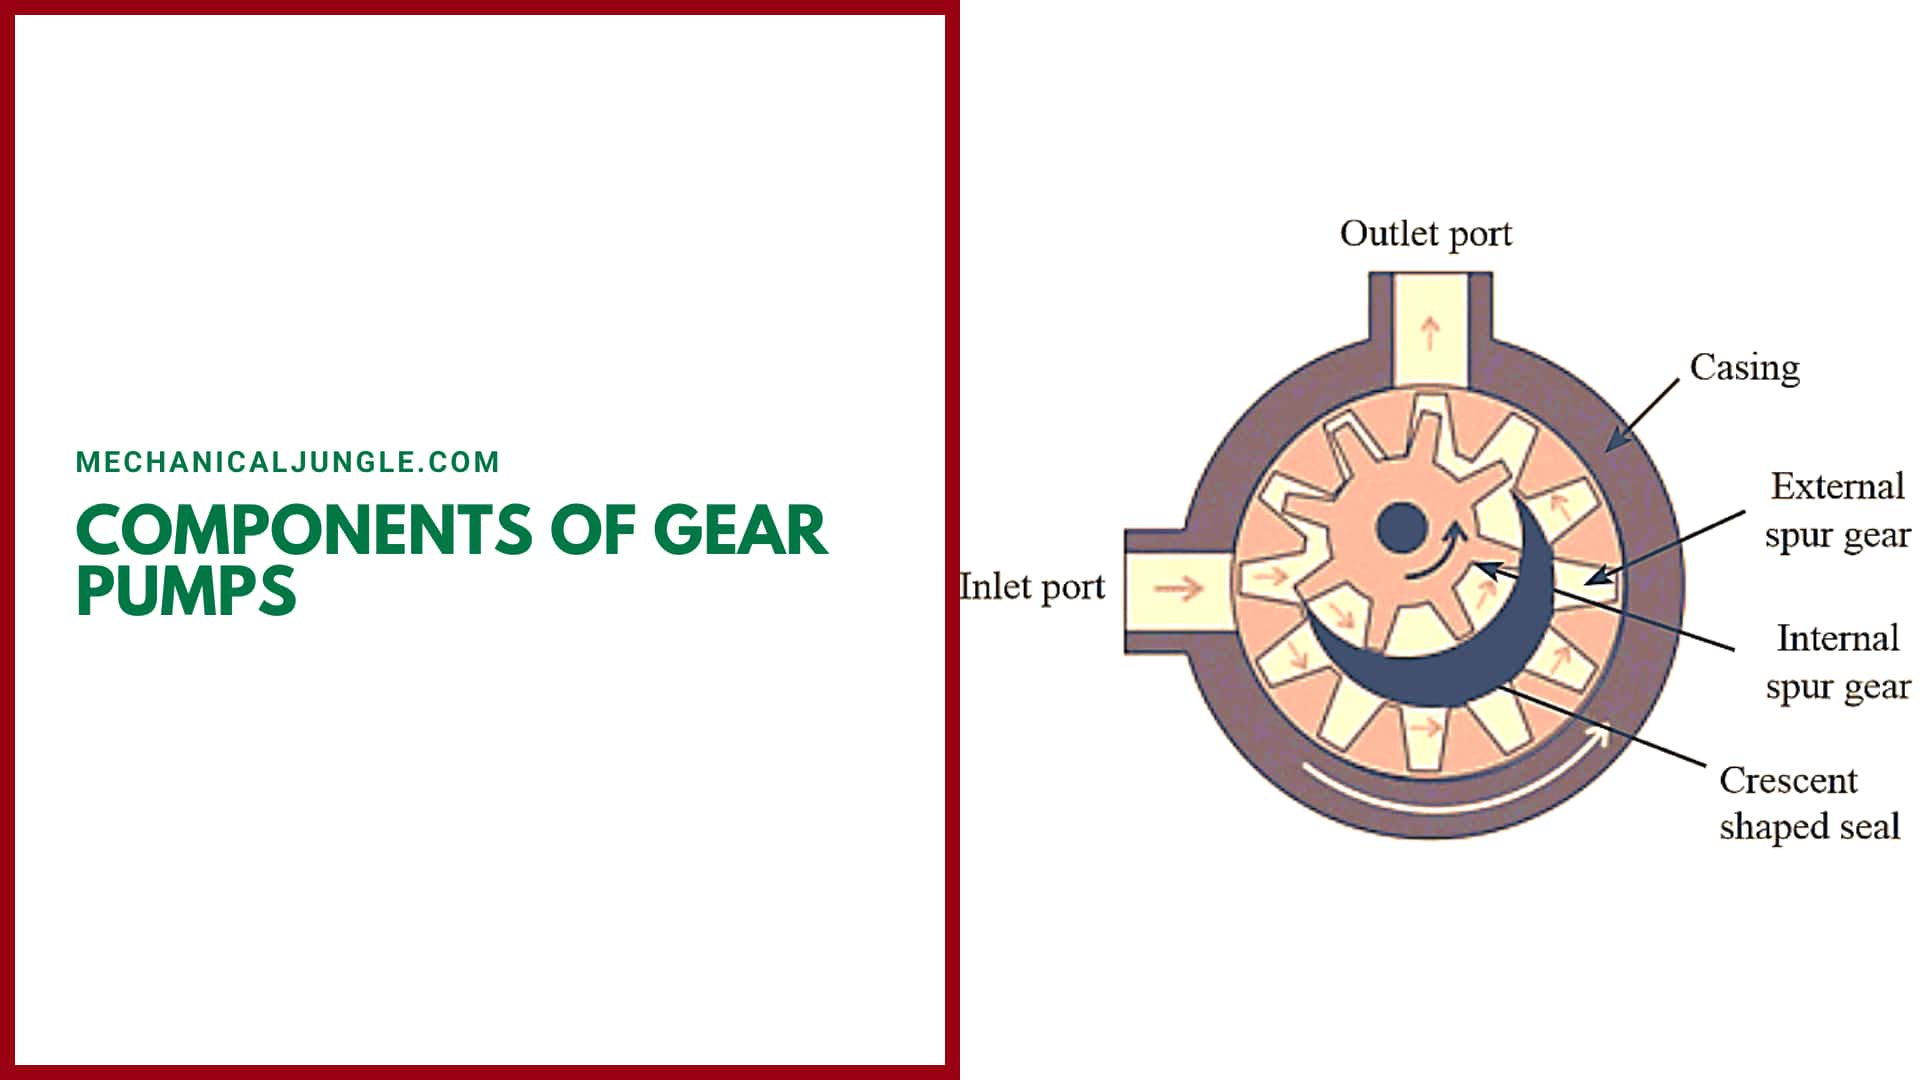 Components of Gear Pumps